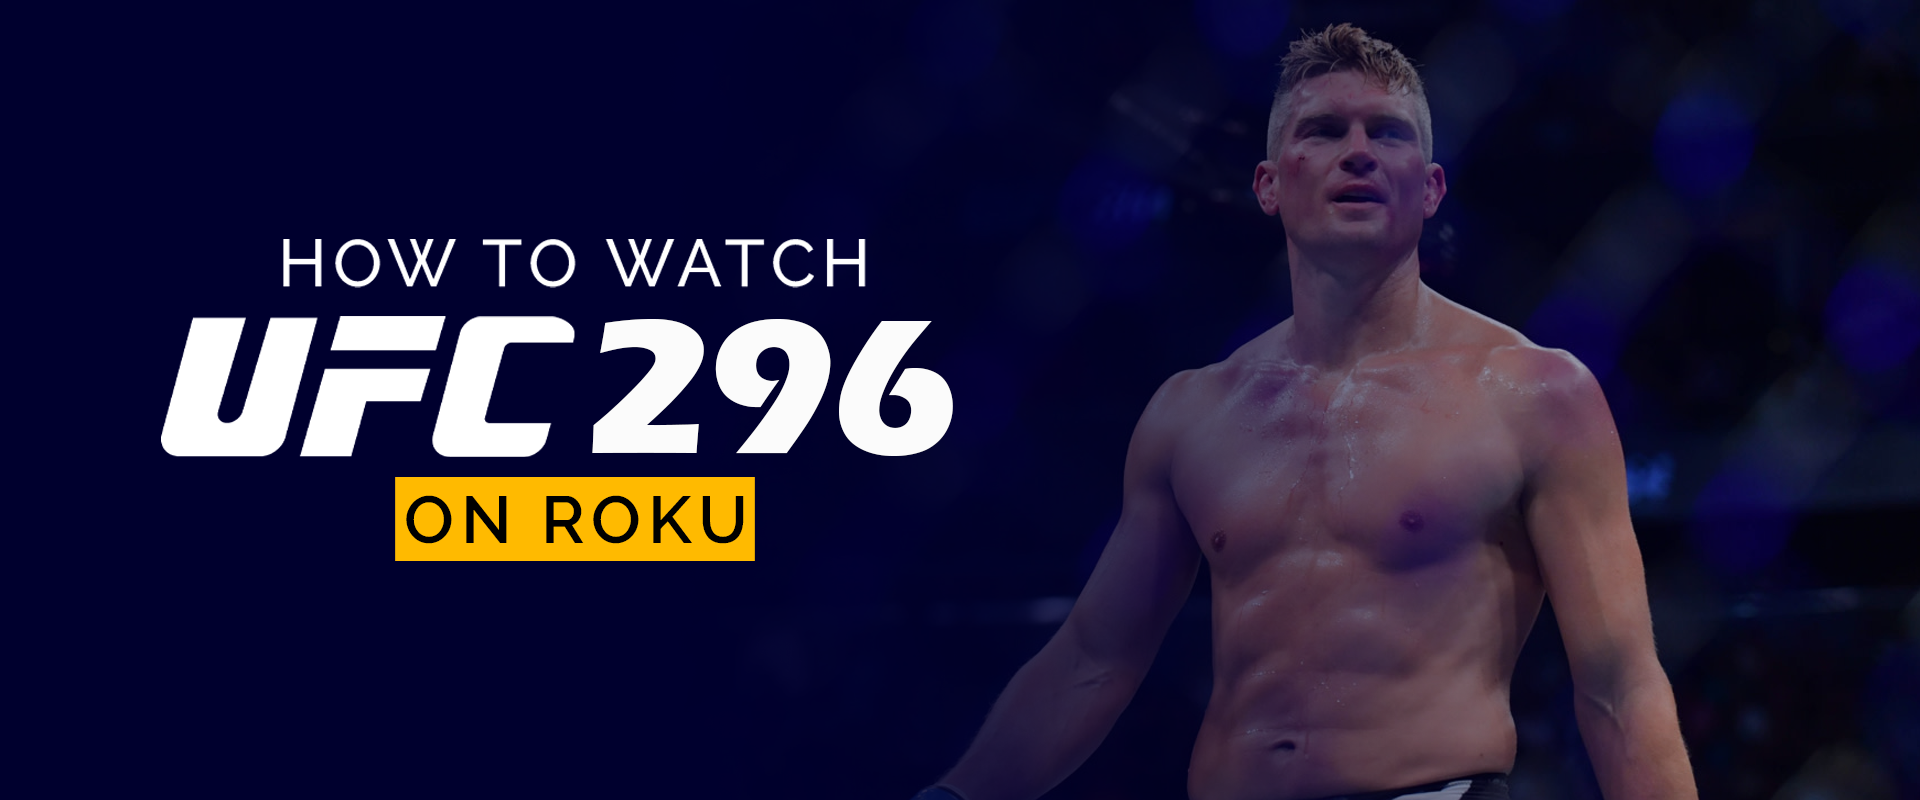 How to Watch UFC 296 on Roku